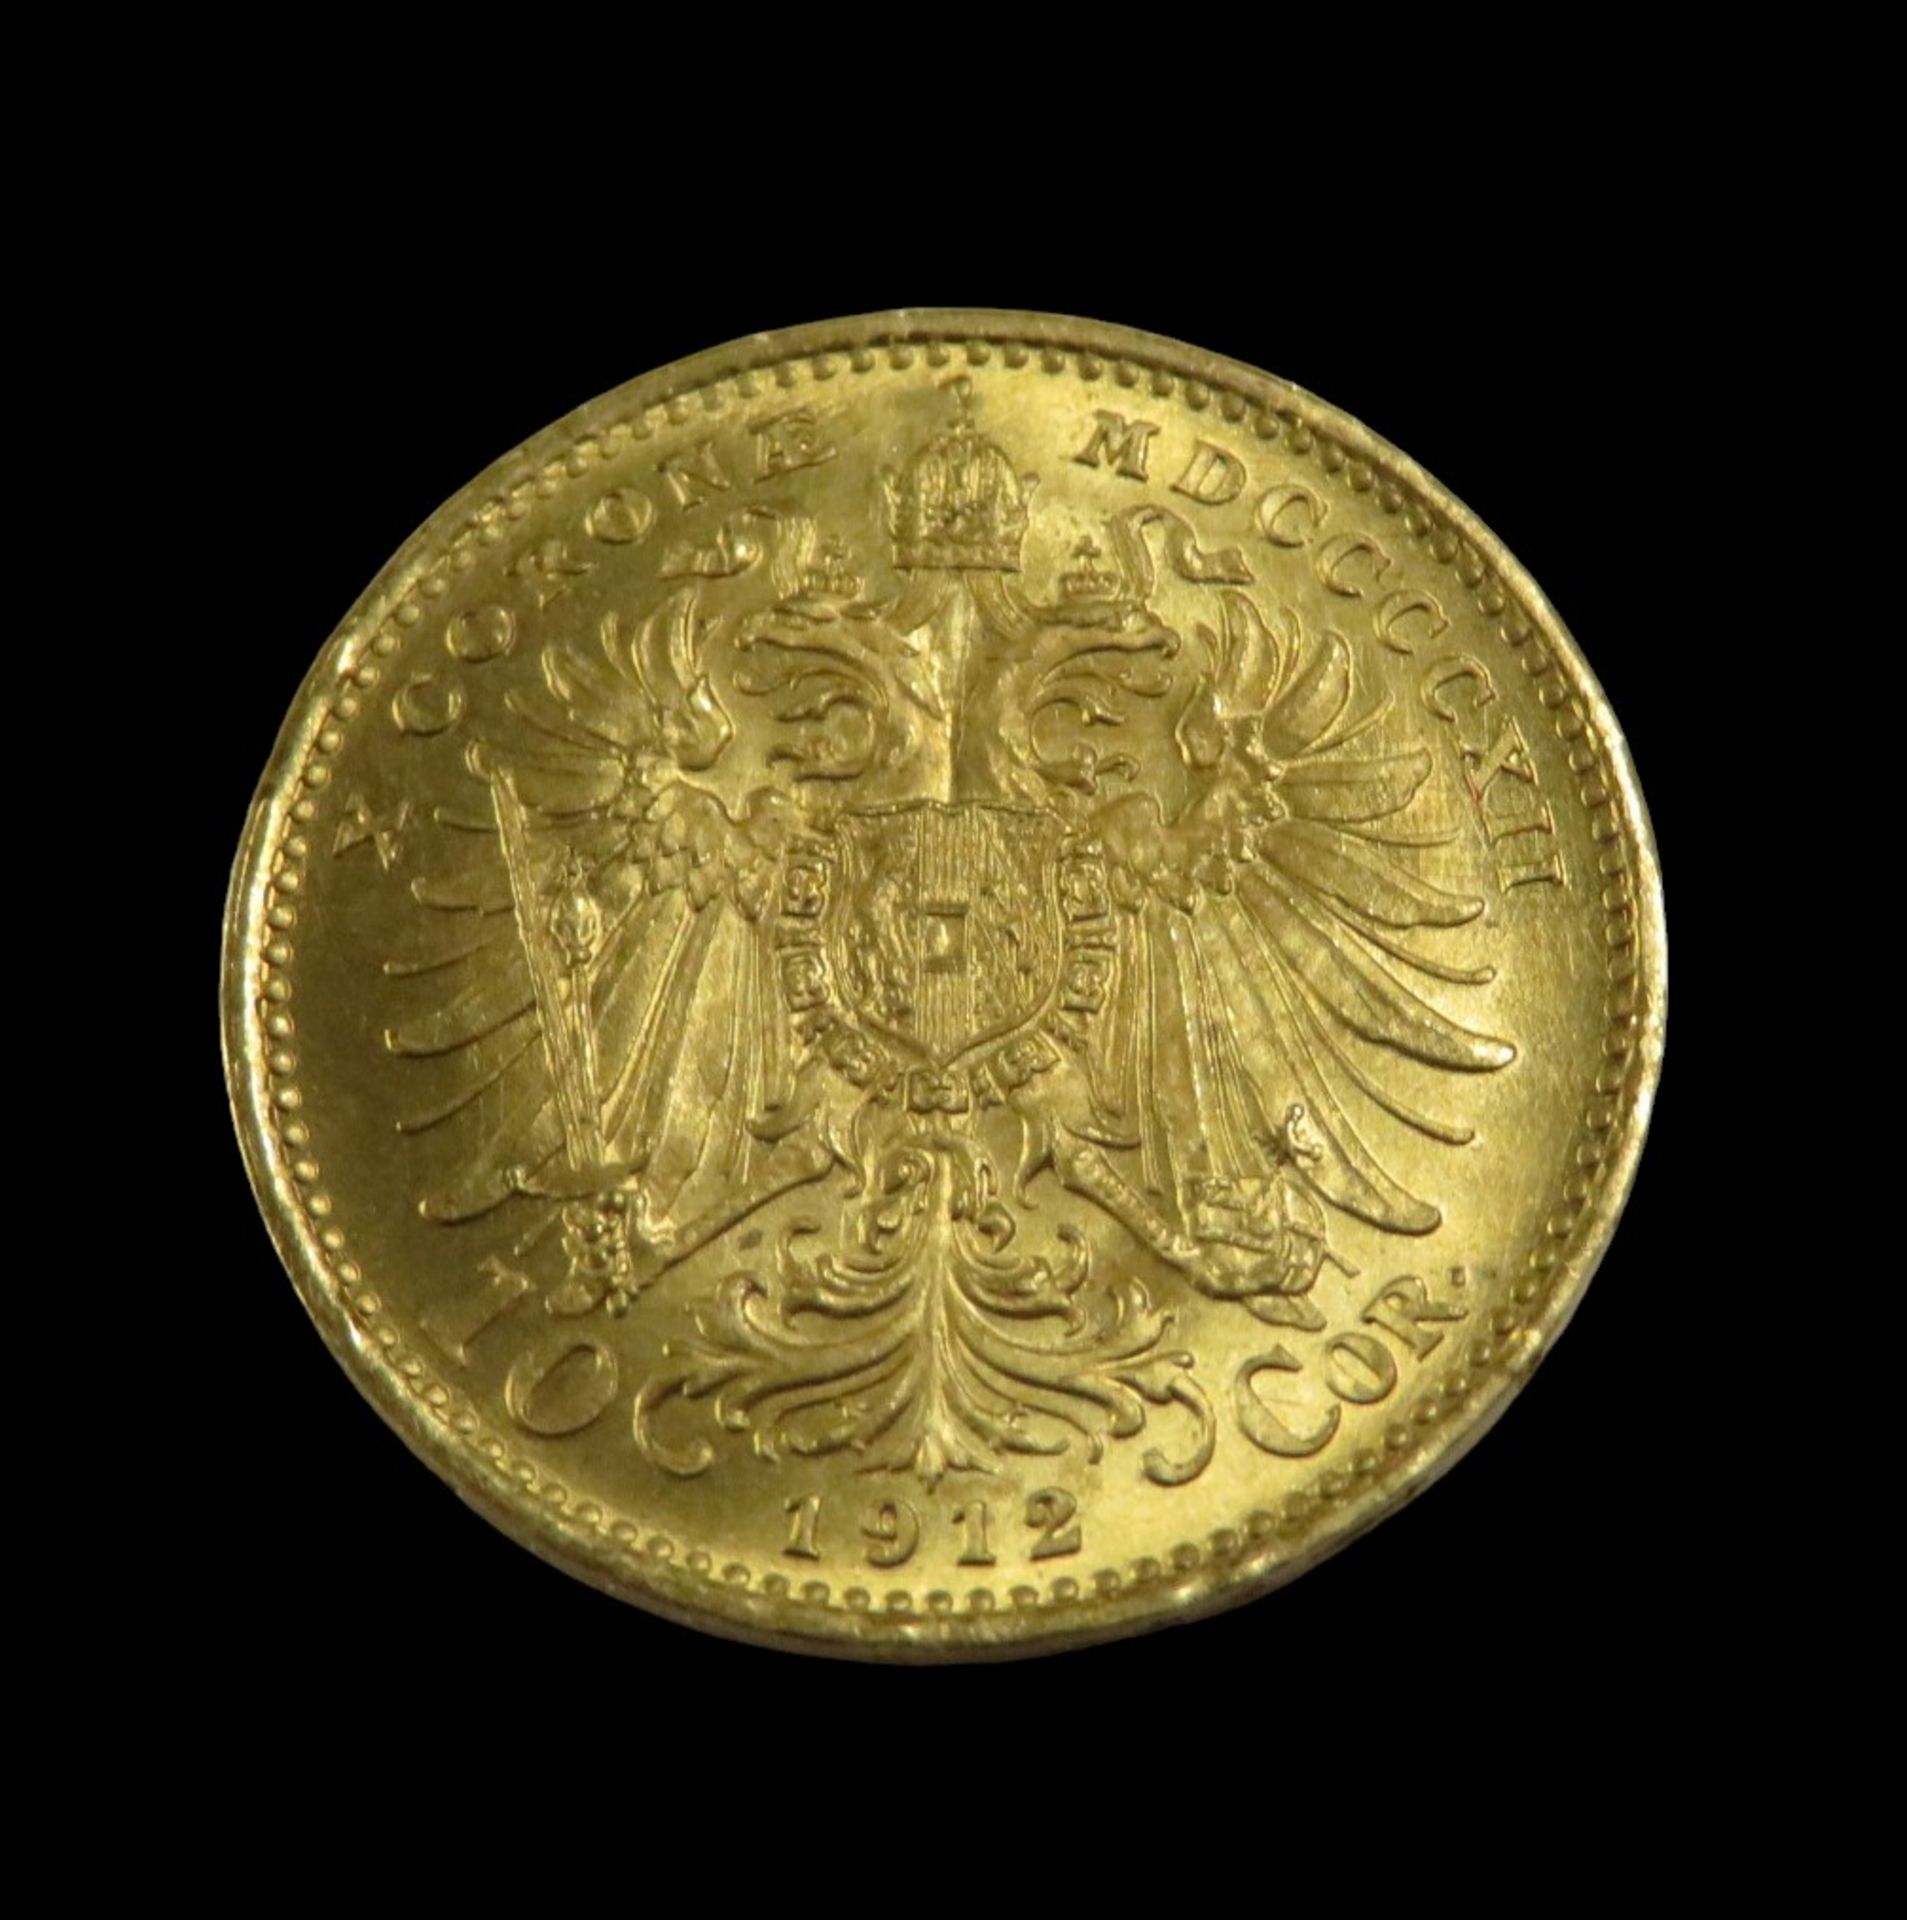 Goldmünze, Österreich, 10 Kronen, Franz Joseph I, 1912, Gold 900/000, 3,3 g, d 1,9 cm. - Image 2 of 2